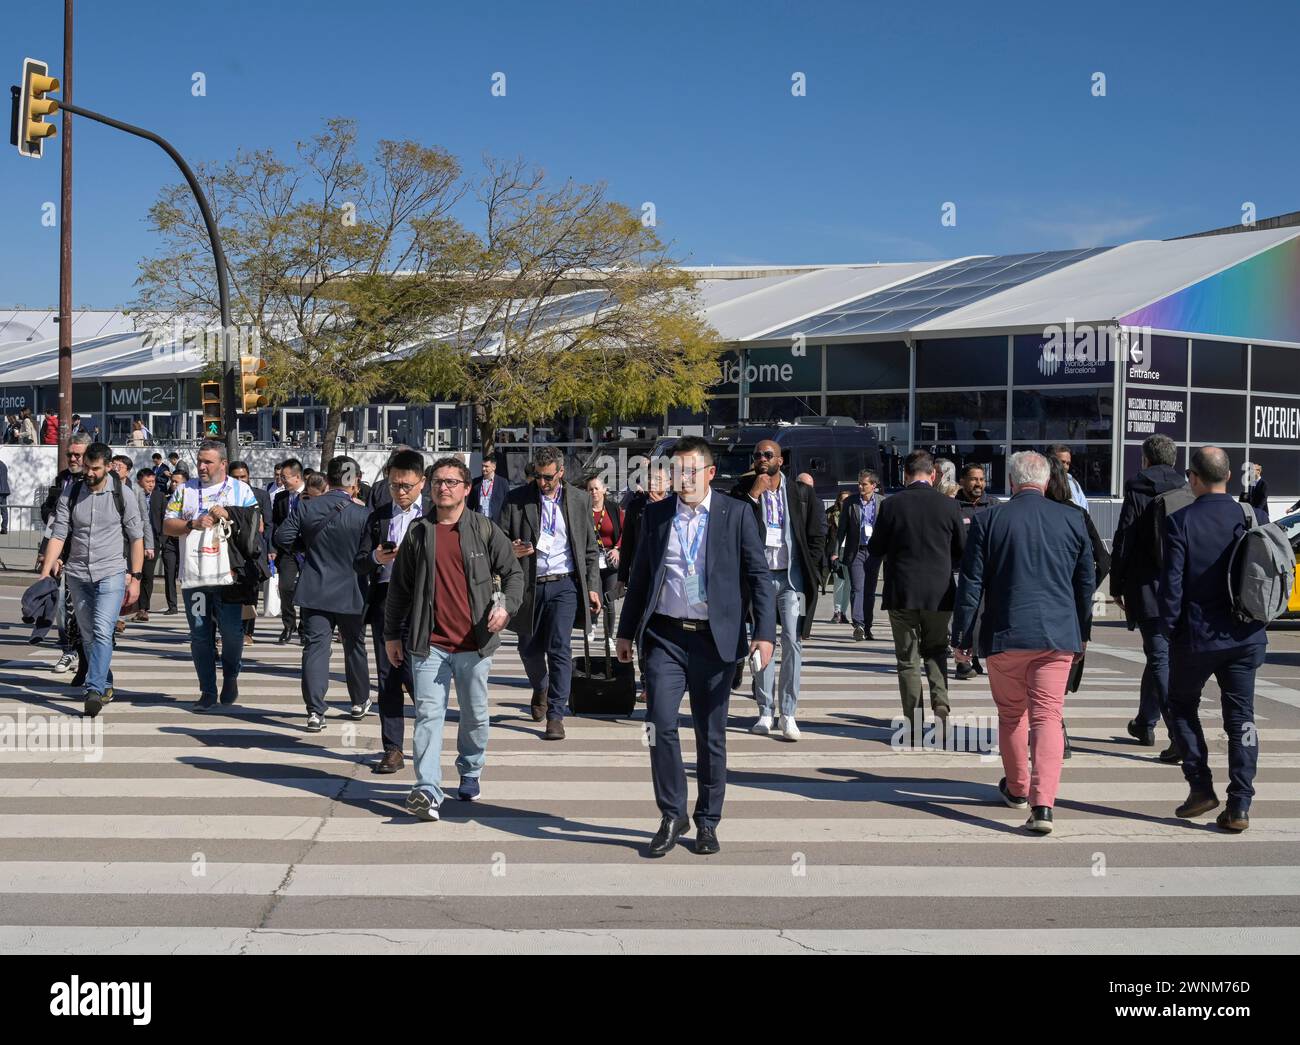 Visitors outside the exhibition centre, MWC Mobile World Congress 2024, Barcelona, Spain Stock Photo